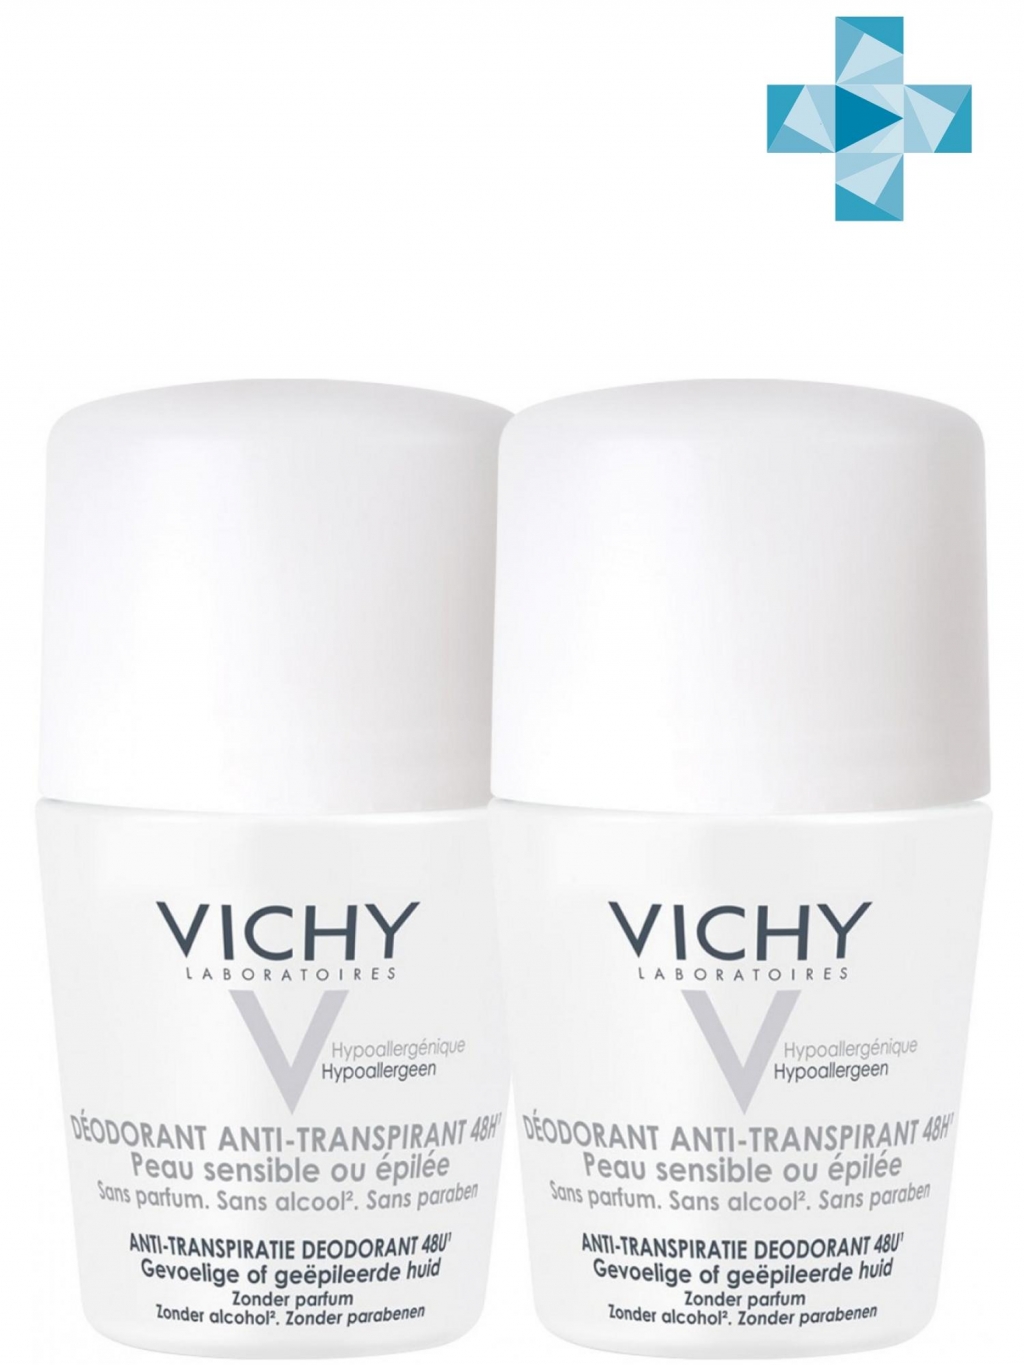 Vichy Дезодорант шариковый 48ч для чувствительной кожи, 2х50 мл (Vichy, Deodorant)